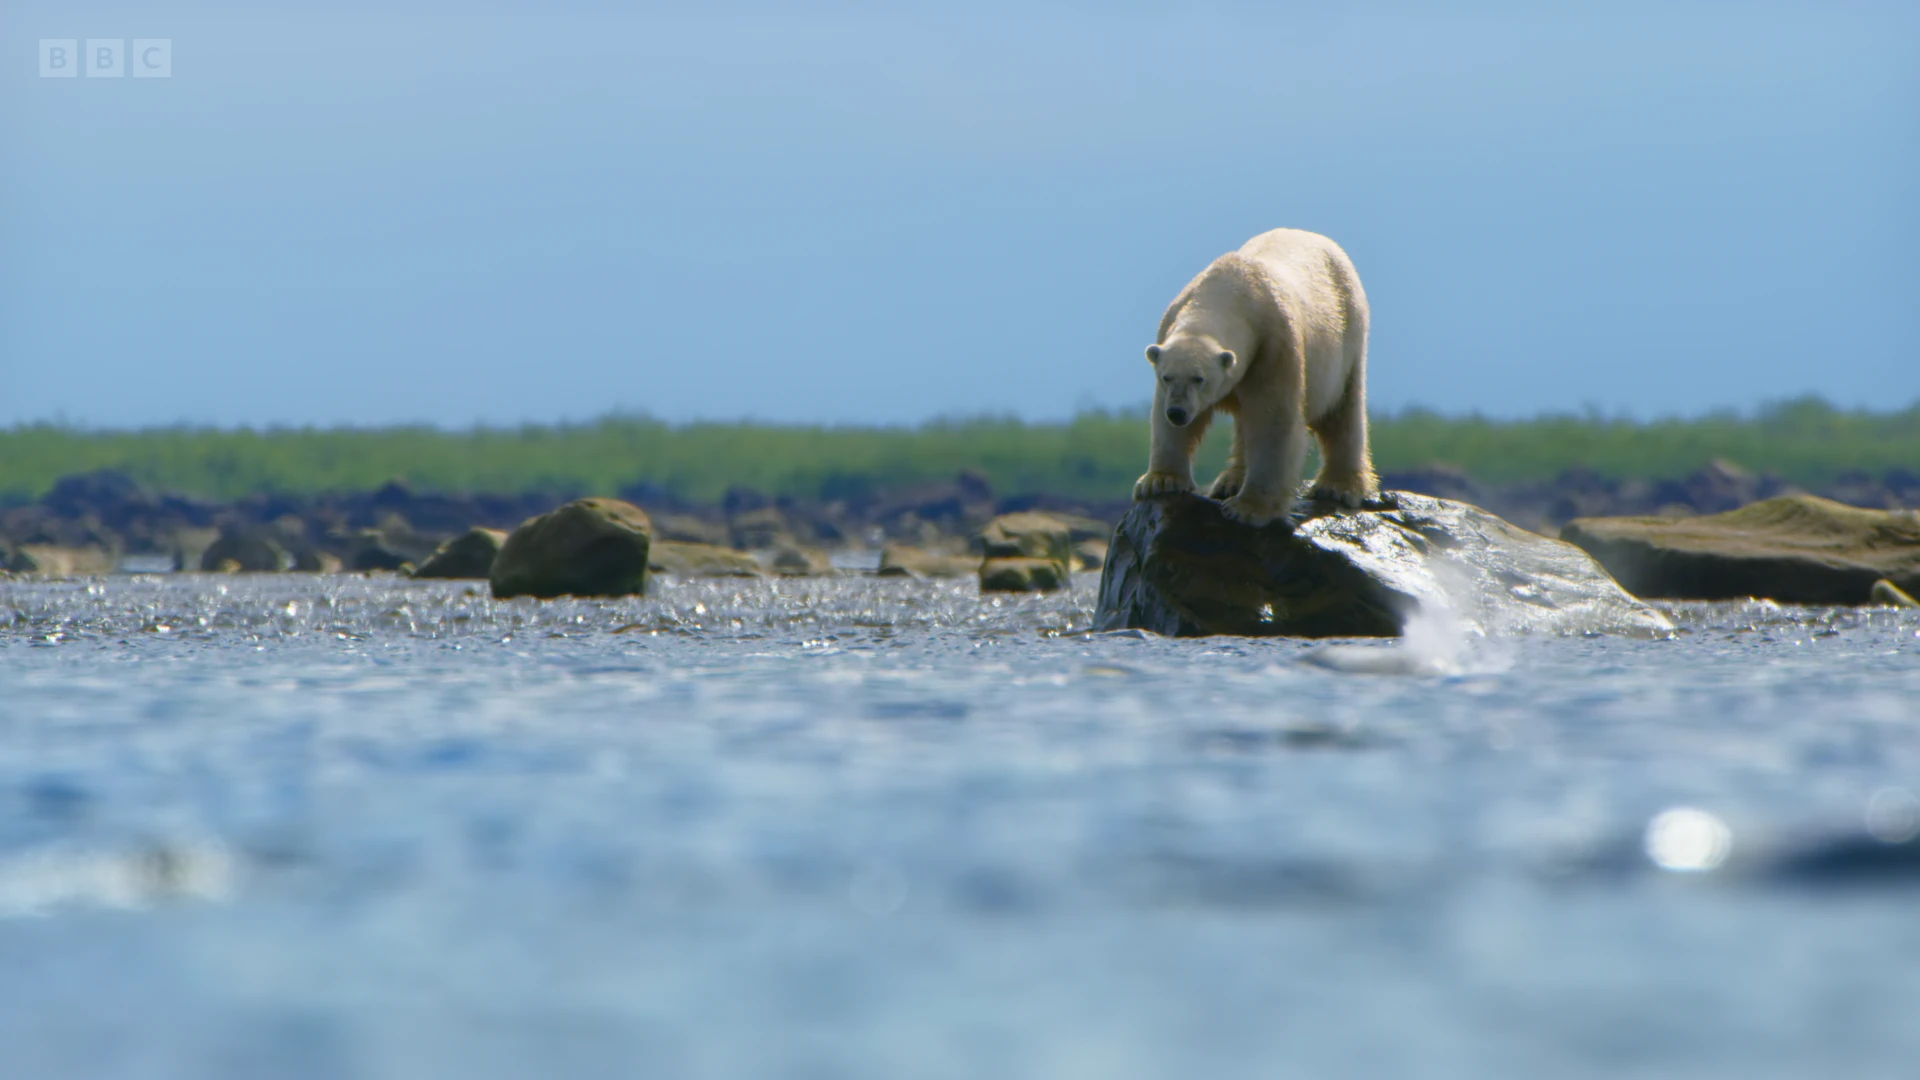 Polar bear (Ursus maritimus) as shown in Seven Worlds, One Planet - North America